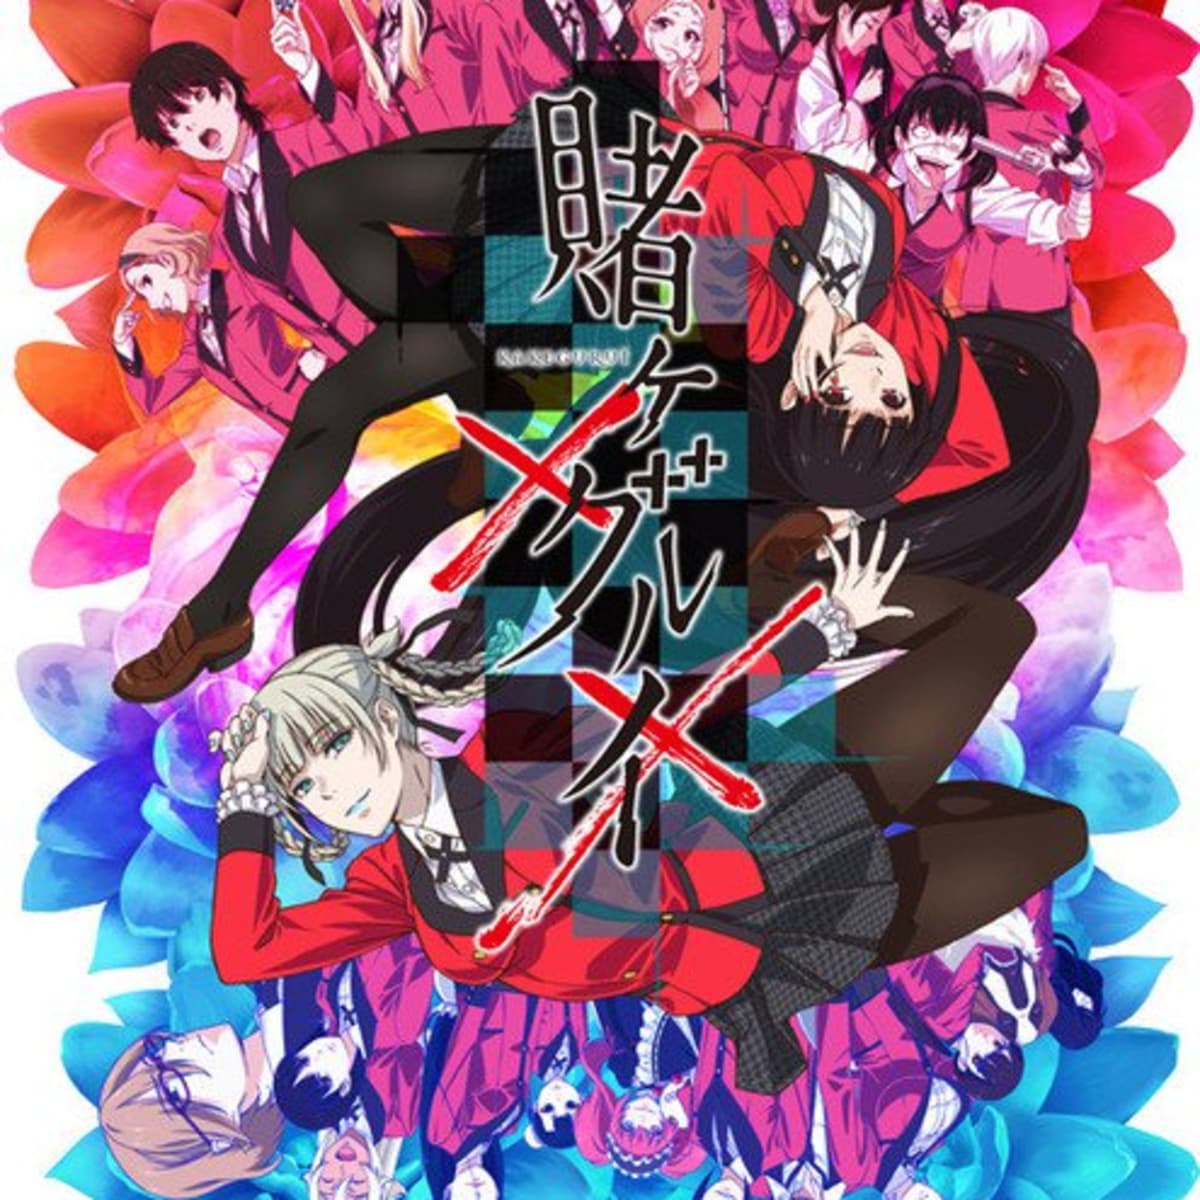 Qoo News] Anime Kakegurui has a second season in production